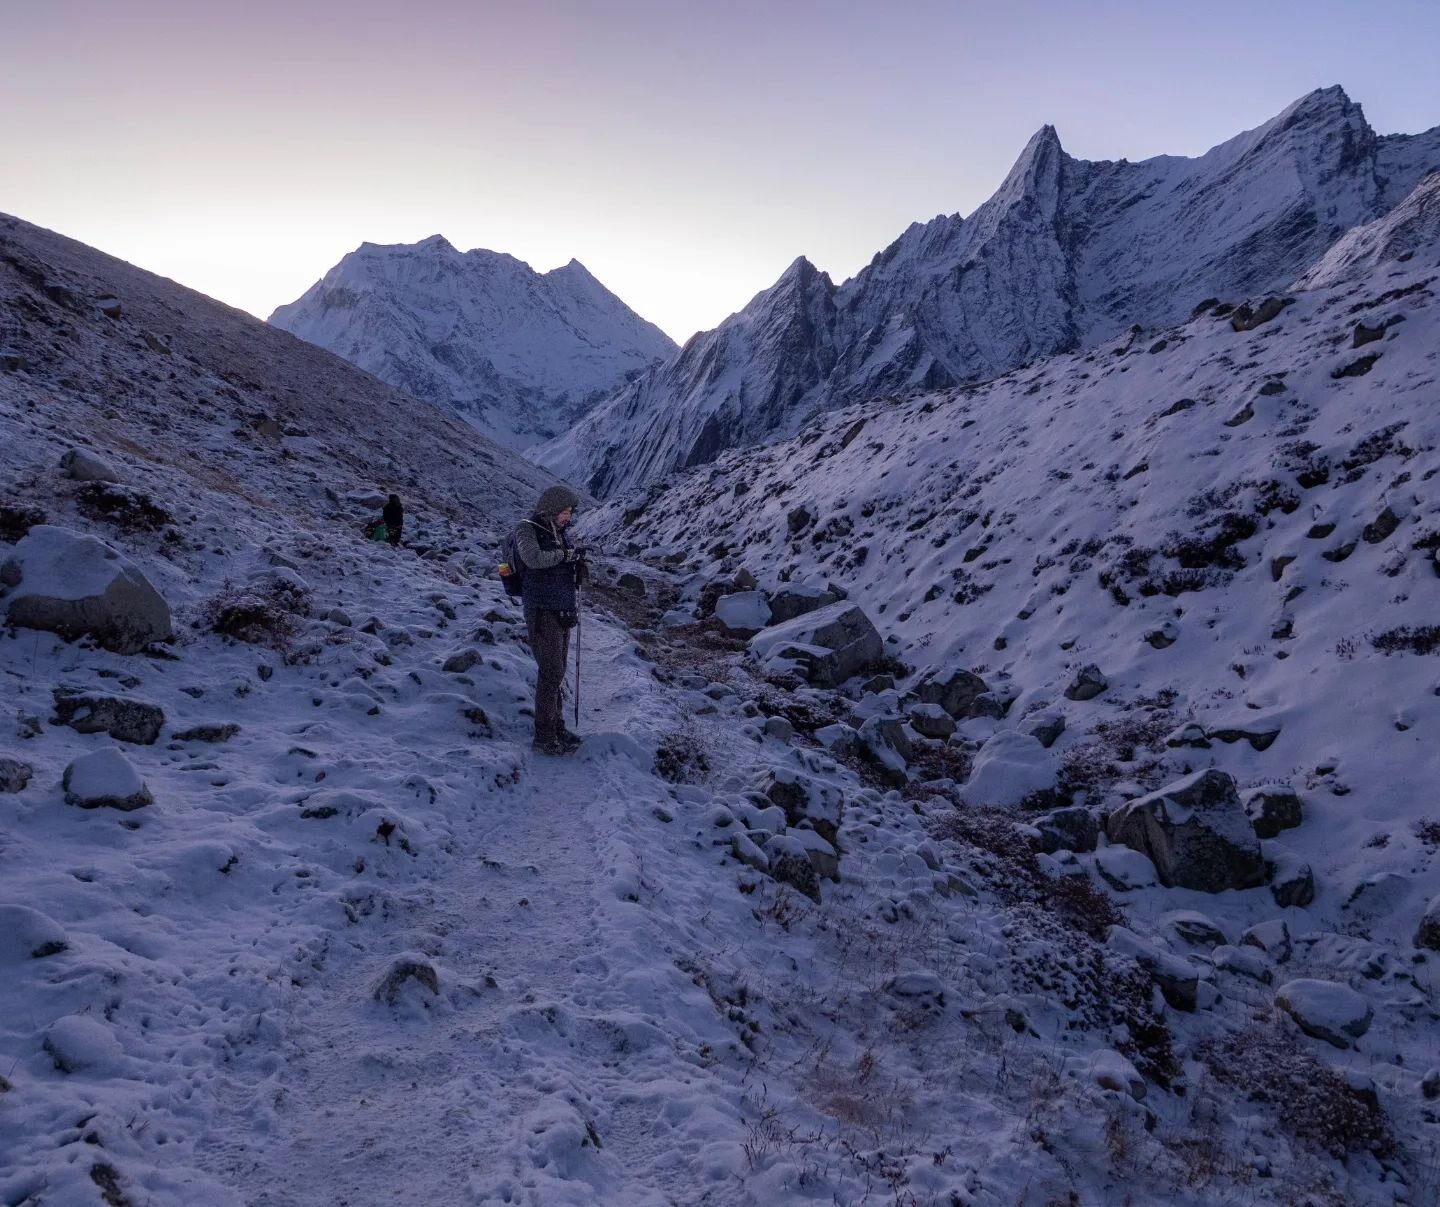 On day 28 we crossed Larke La pass (5100m) in a cold but most beautiful weather 🥶
.
.
.
.
.
.
.
#greathimalayatrail #ght #ght2023 #himalaya #manaslucircuit #larkela #larkelapass #hiking #nepal #lovenepal #highaltitude #mountains #mountainlove #adven